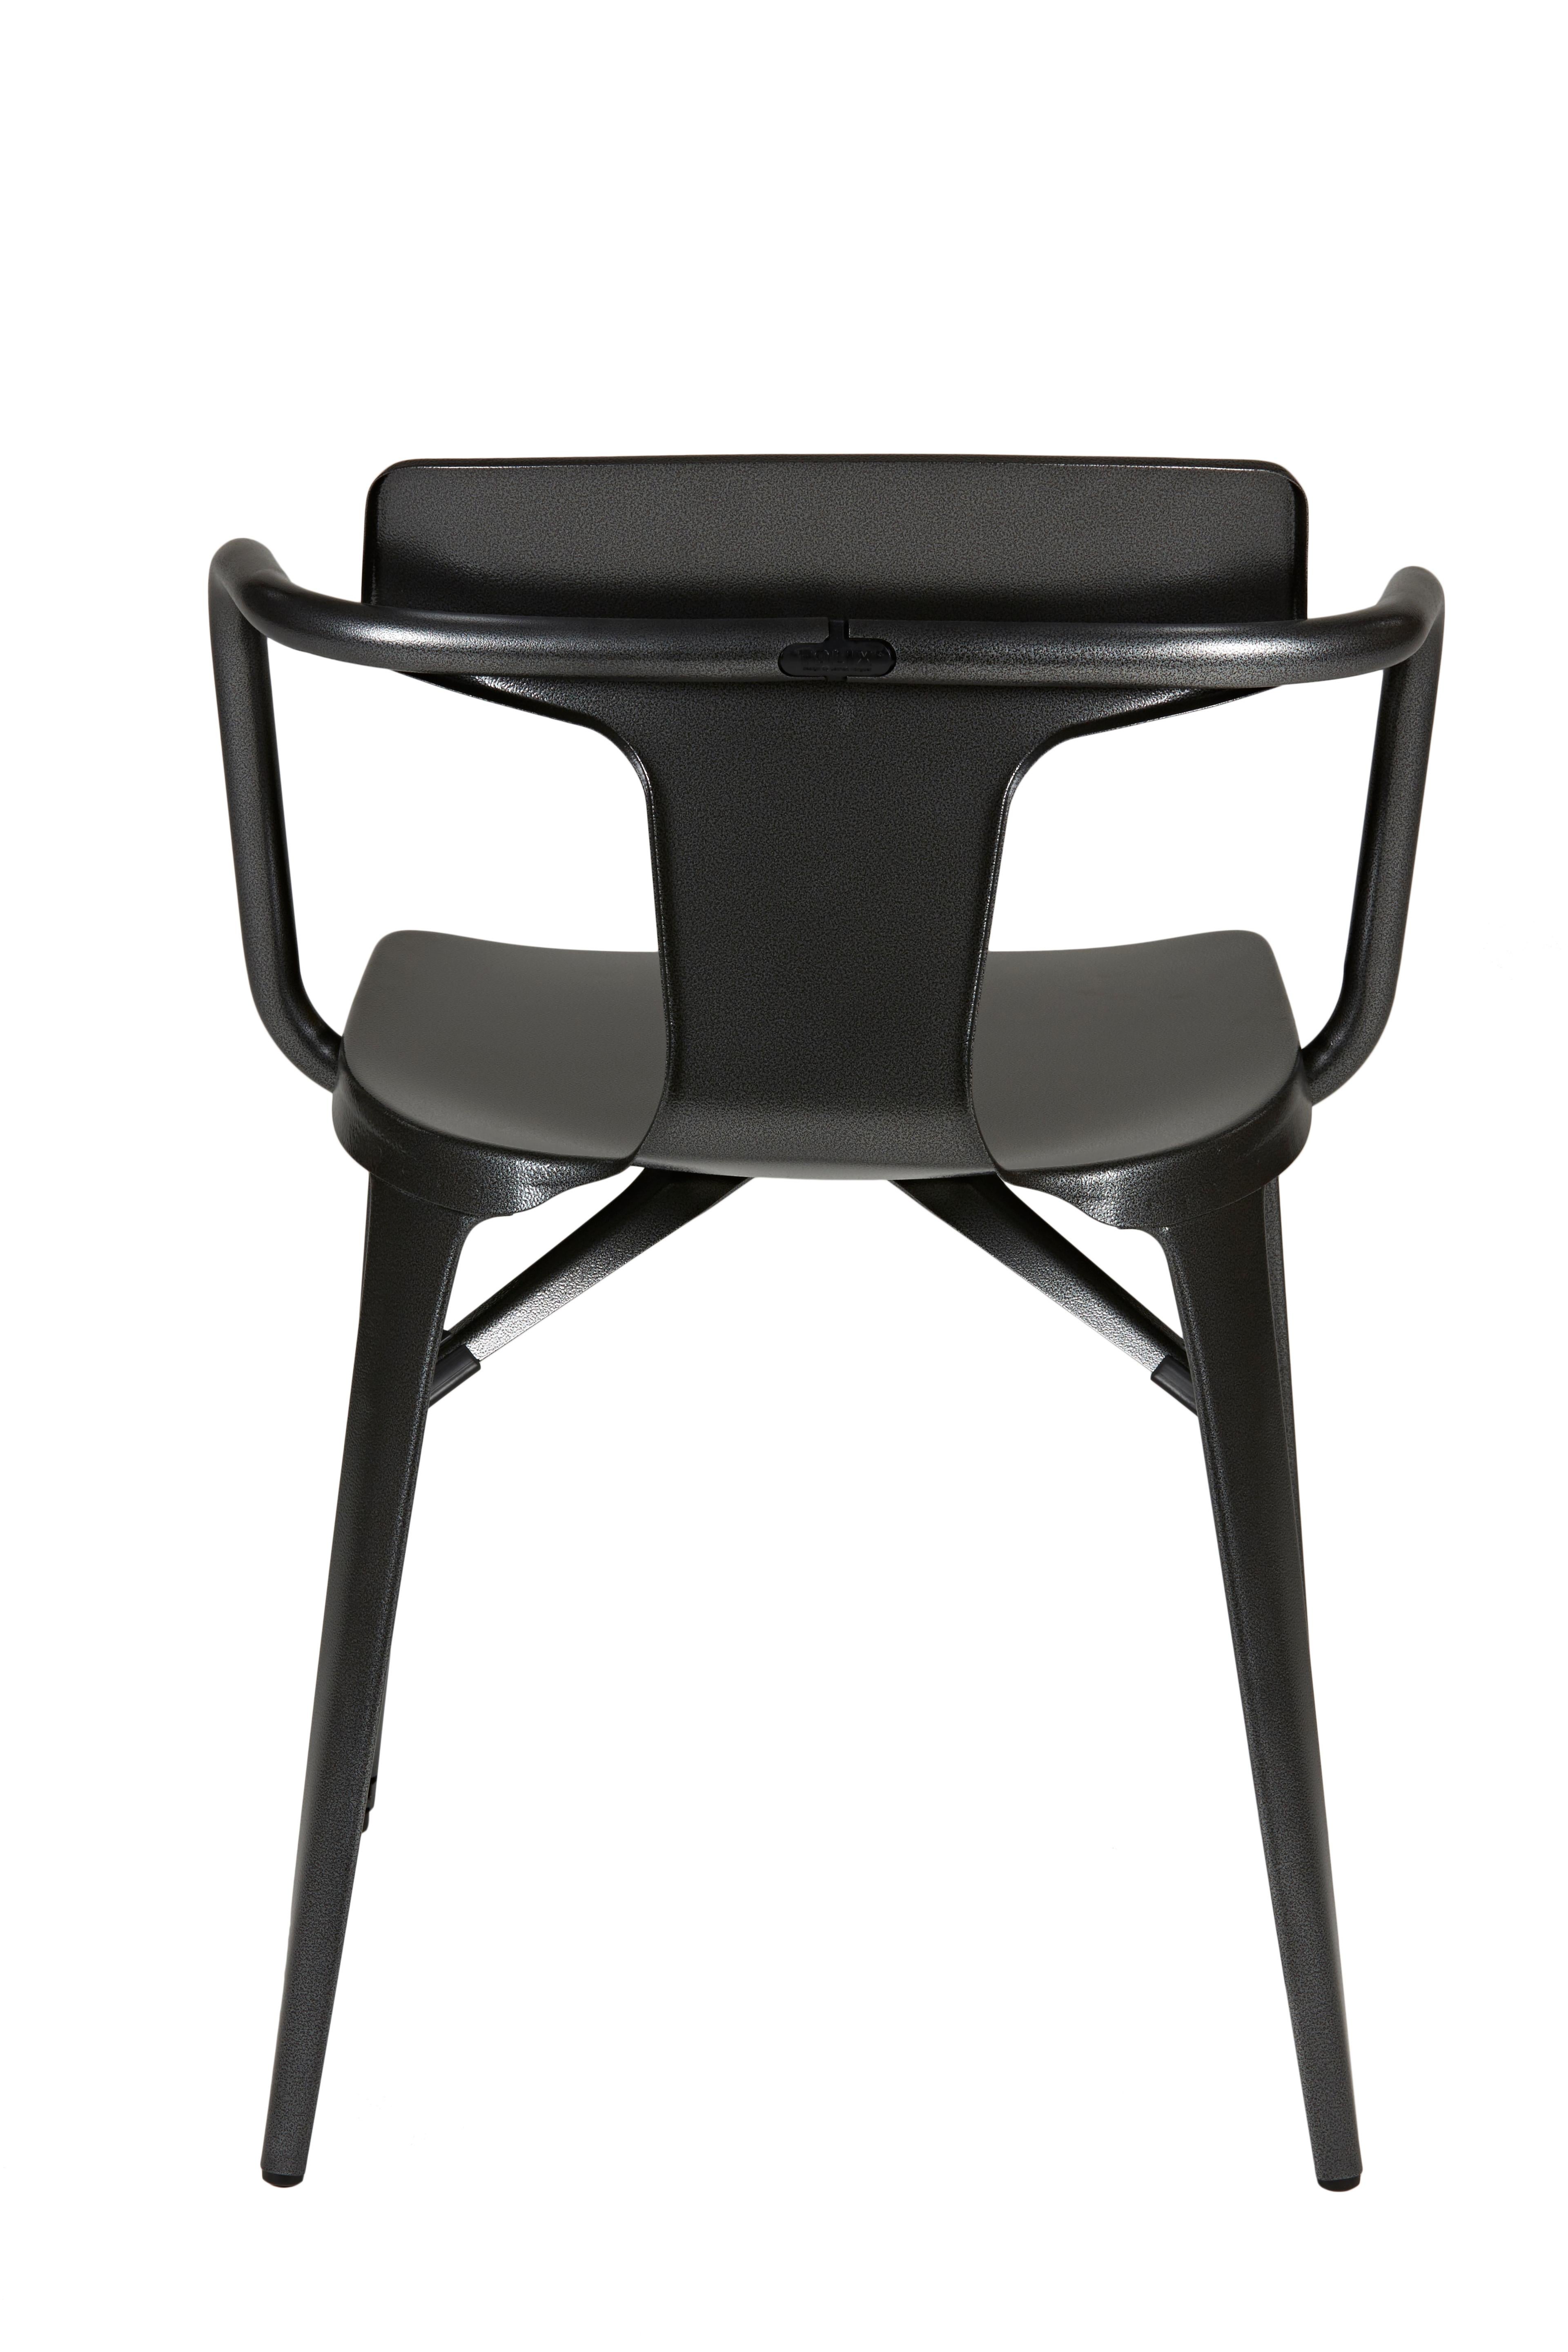 Im Angebot: T14 Chair in Pop Colors by Patrick Norguet and Tolix, Gray (Gris Martelé) 2